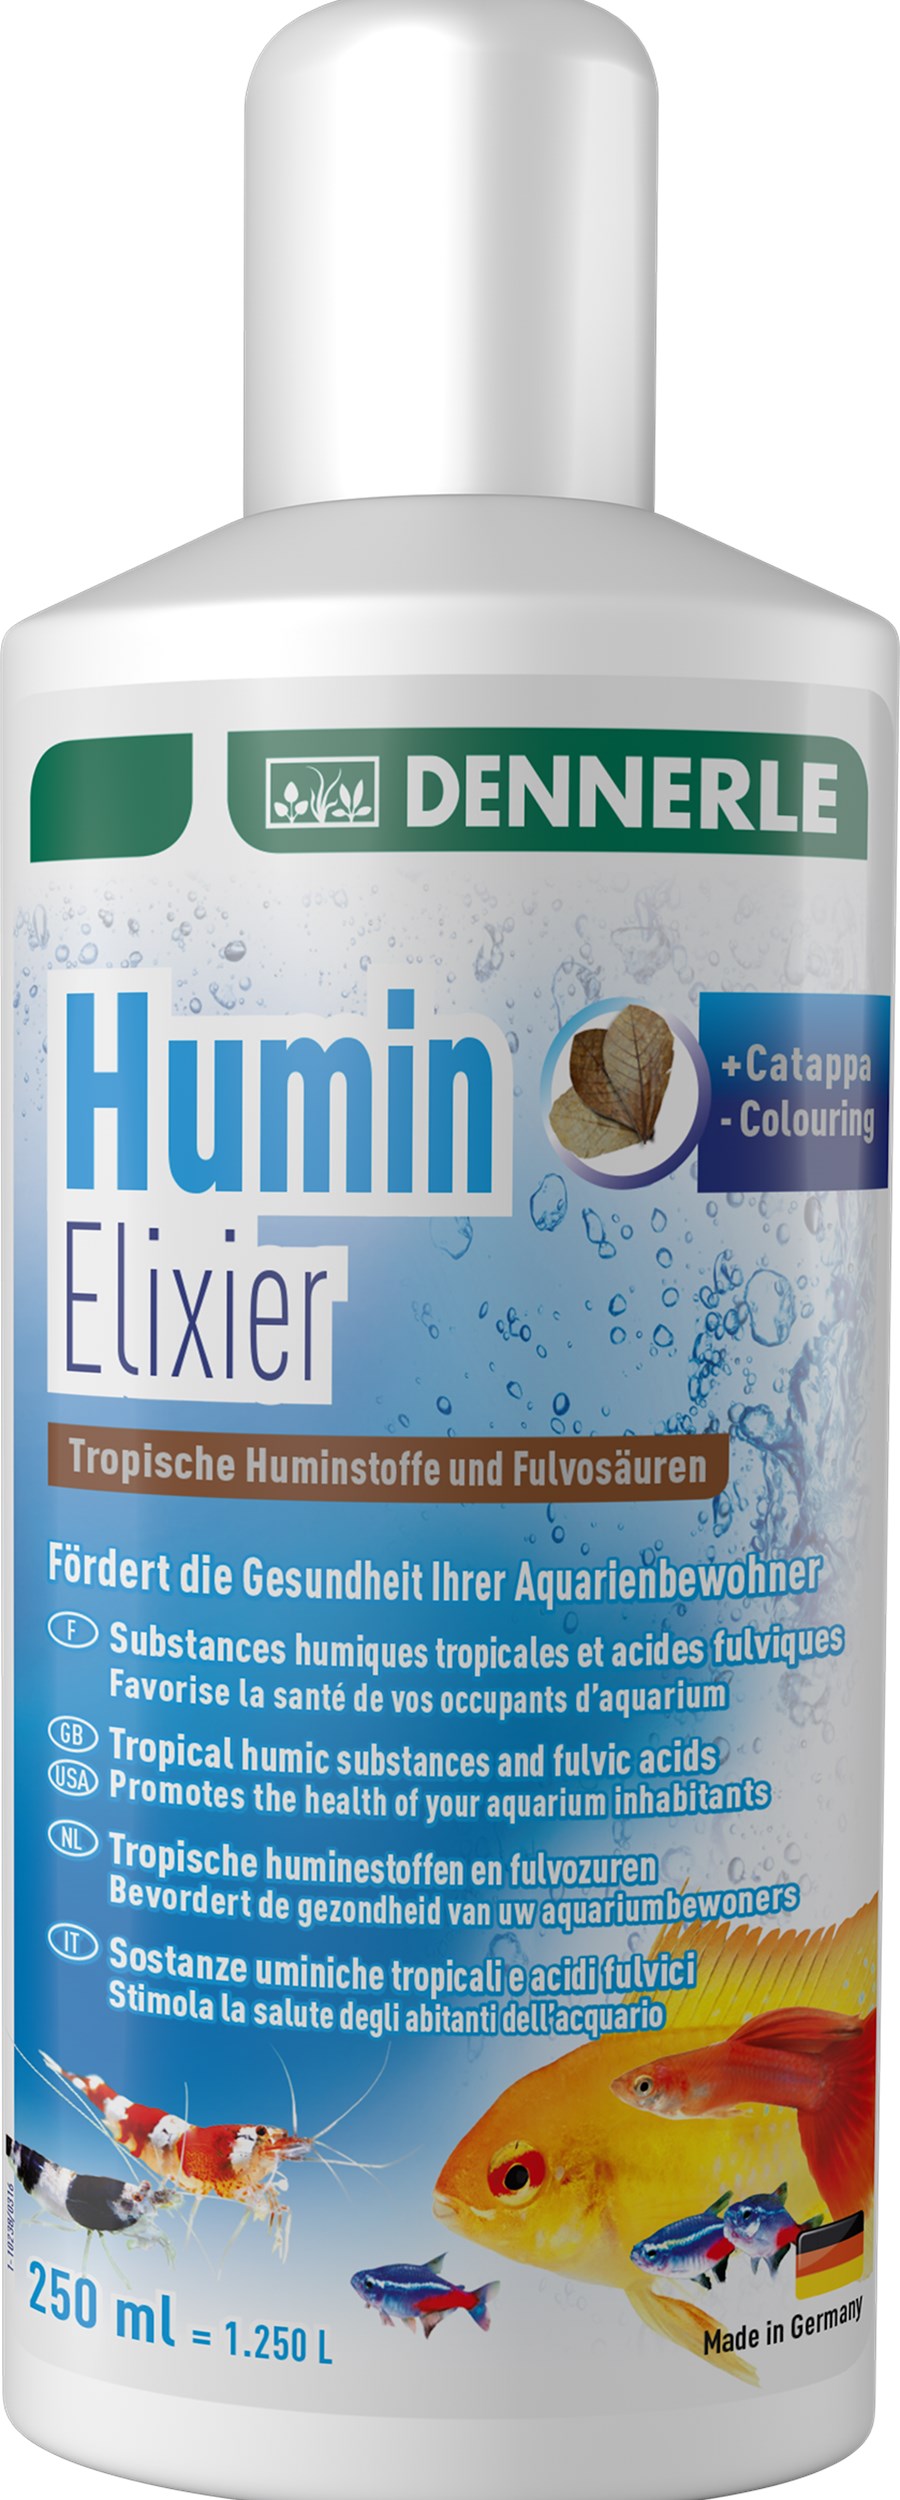 Humin Elixier 500 ml